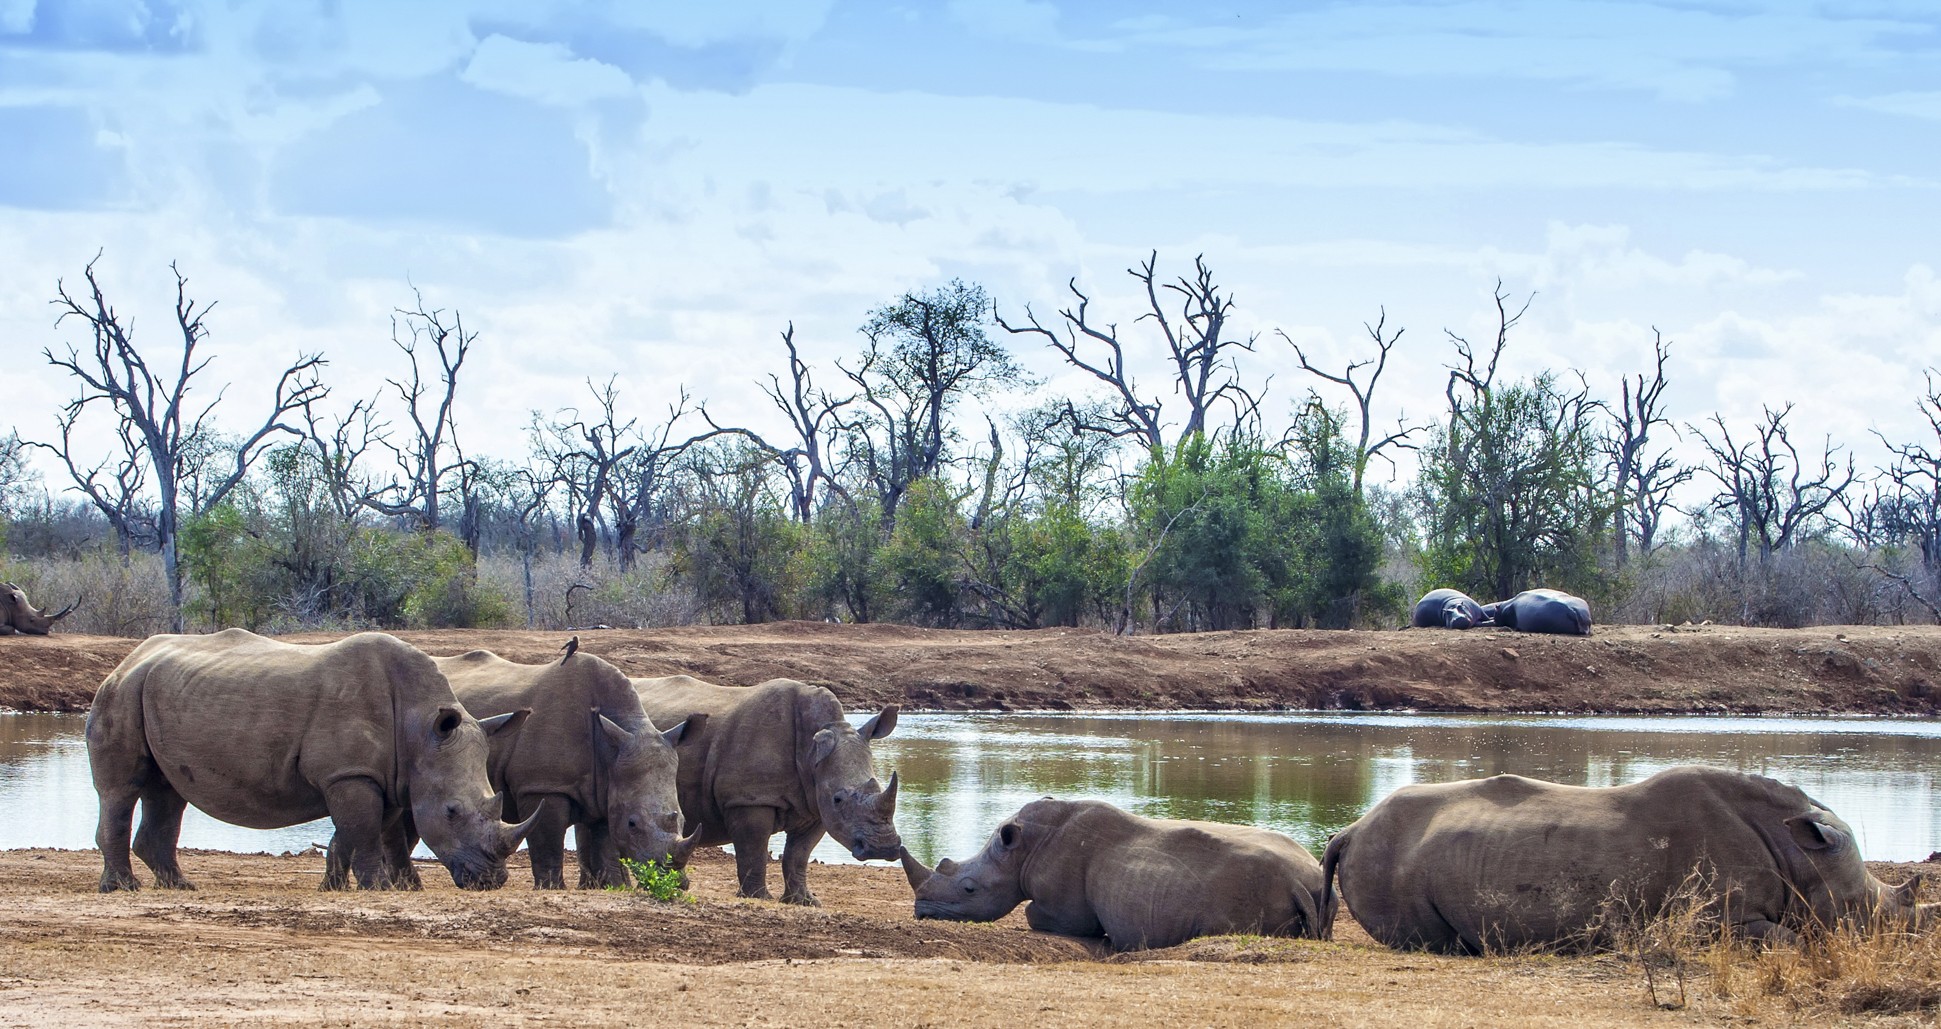 Rhinoceroses in Hlane Royal National Park, eSwatini. Photo: Shutterstock